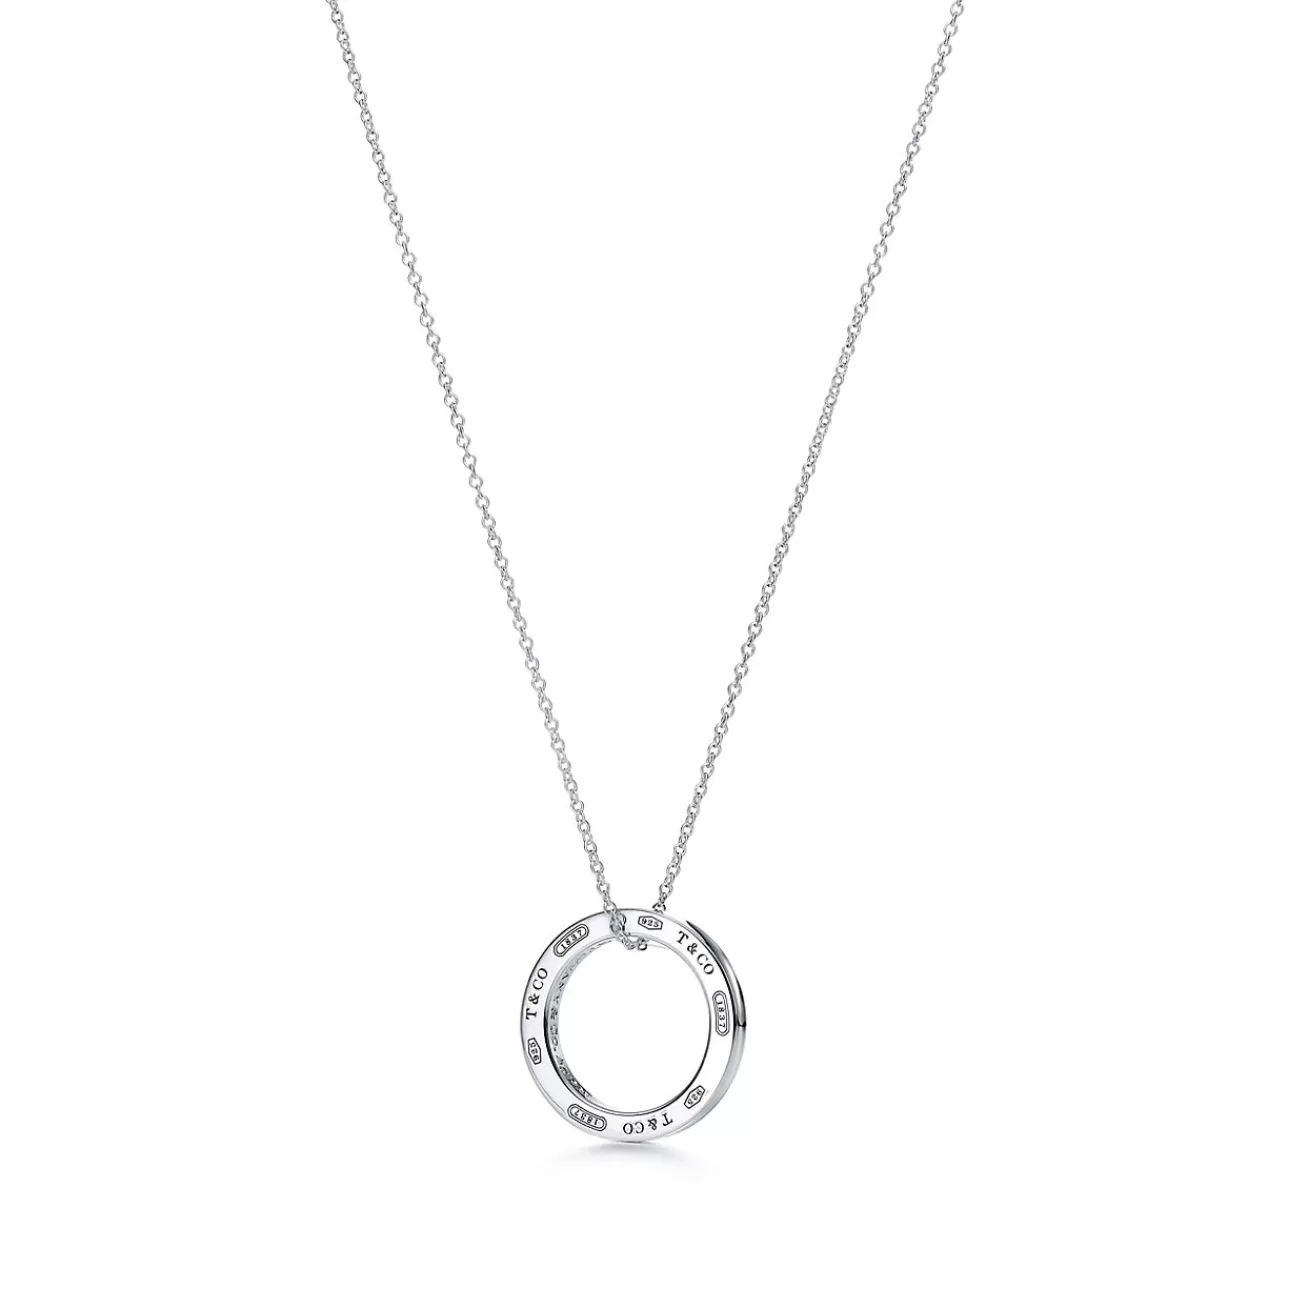 Tiffany & Co. Tiffany 1837™ pendant in sterling silver on a 16" chain. | ^ Necklaces & Pendants | Sterling Silver Jewelry